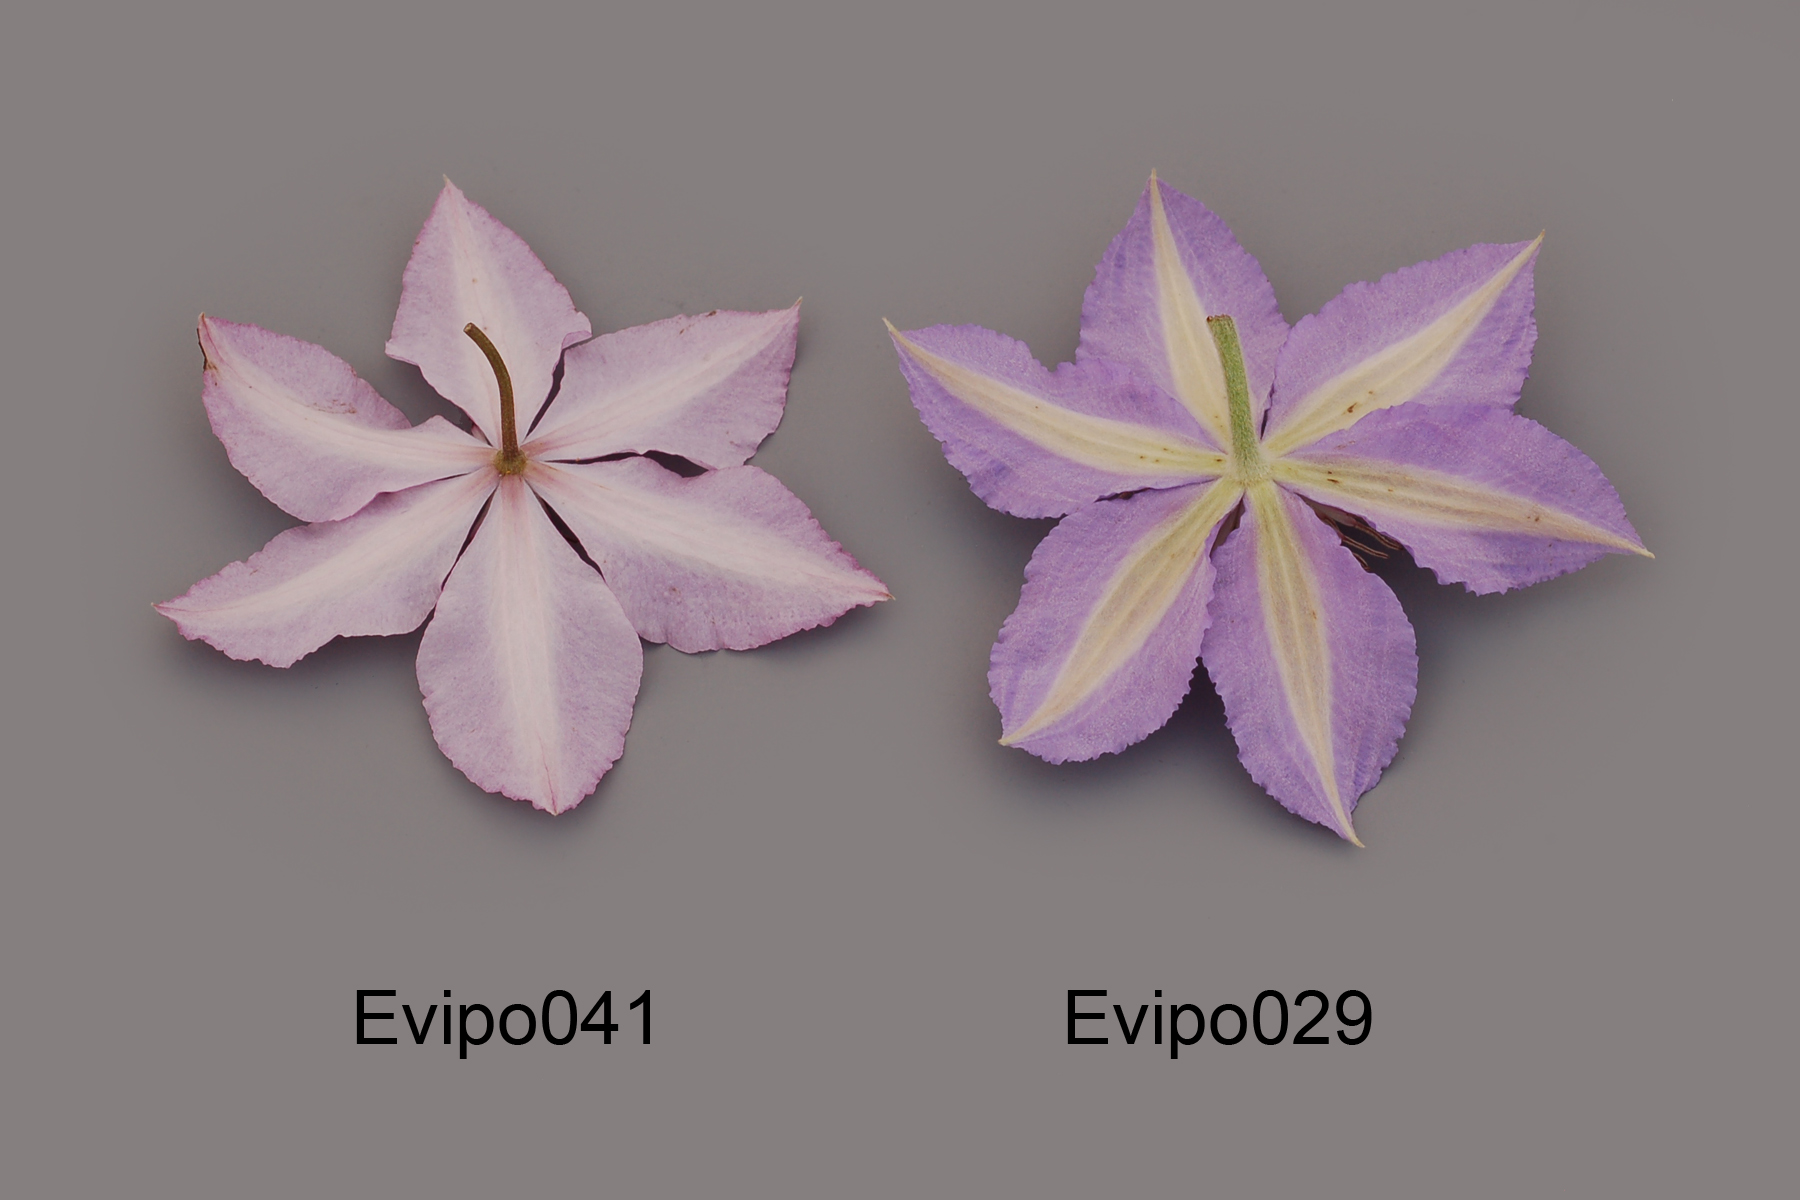 Evipo041